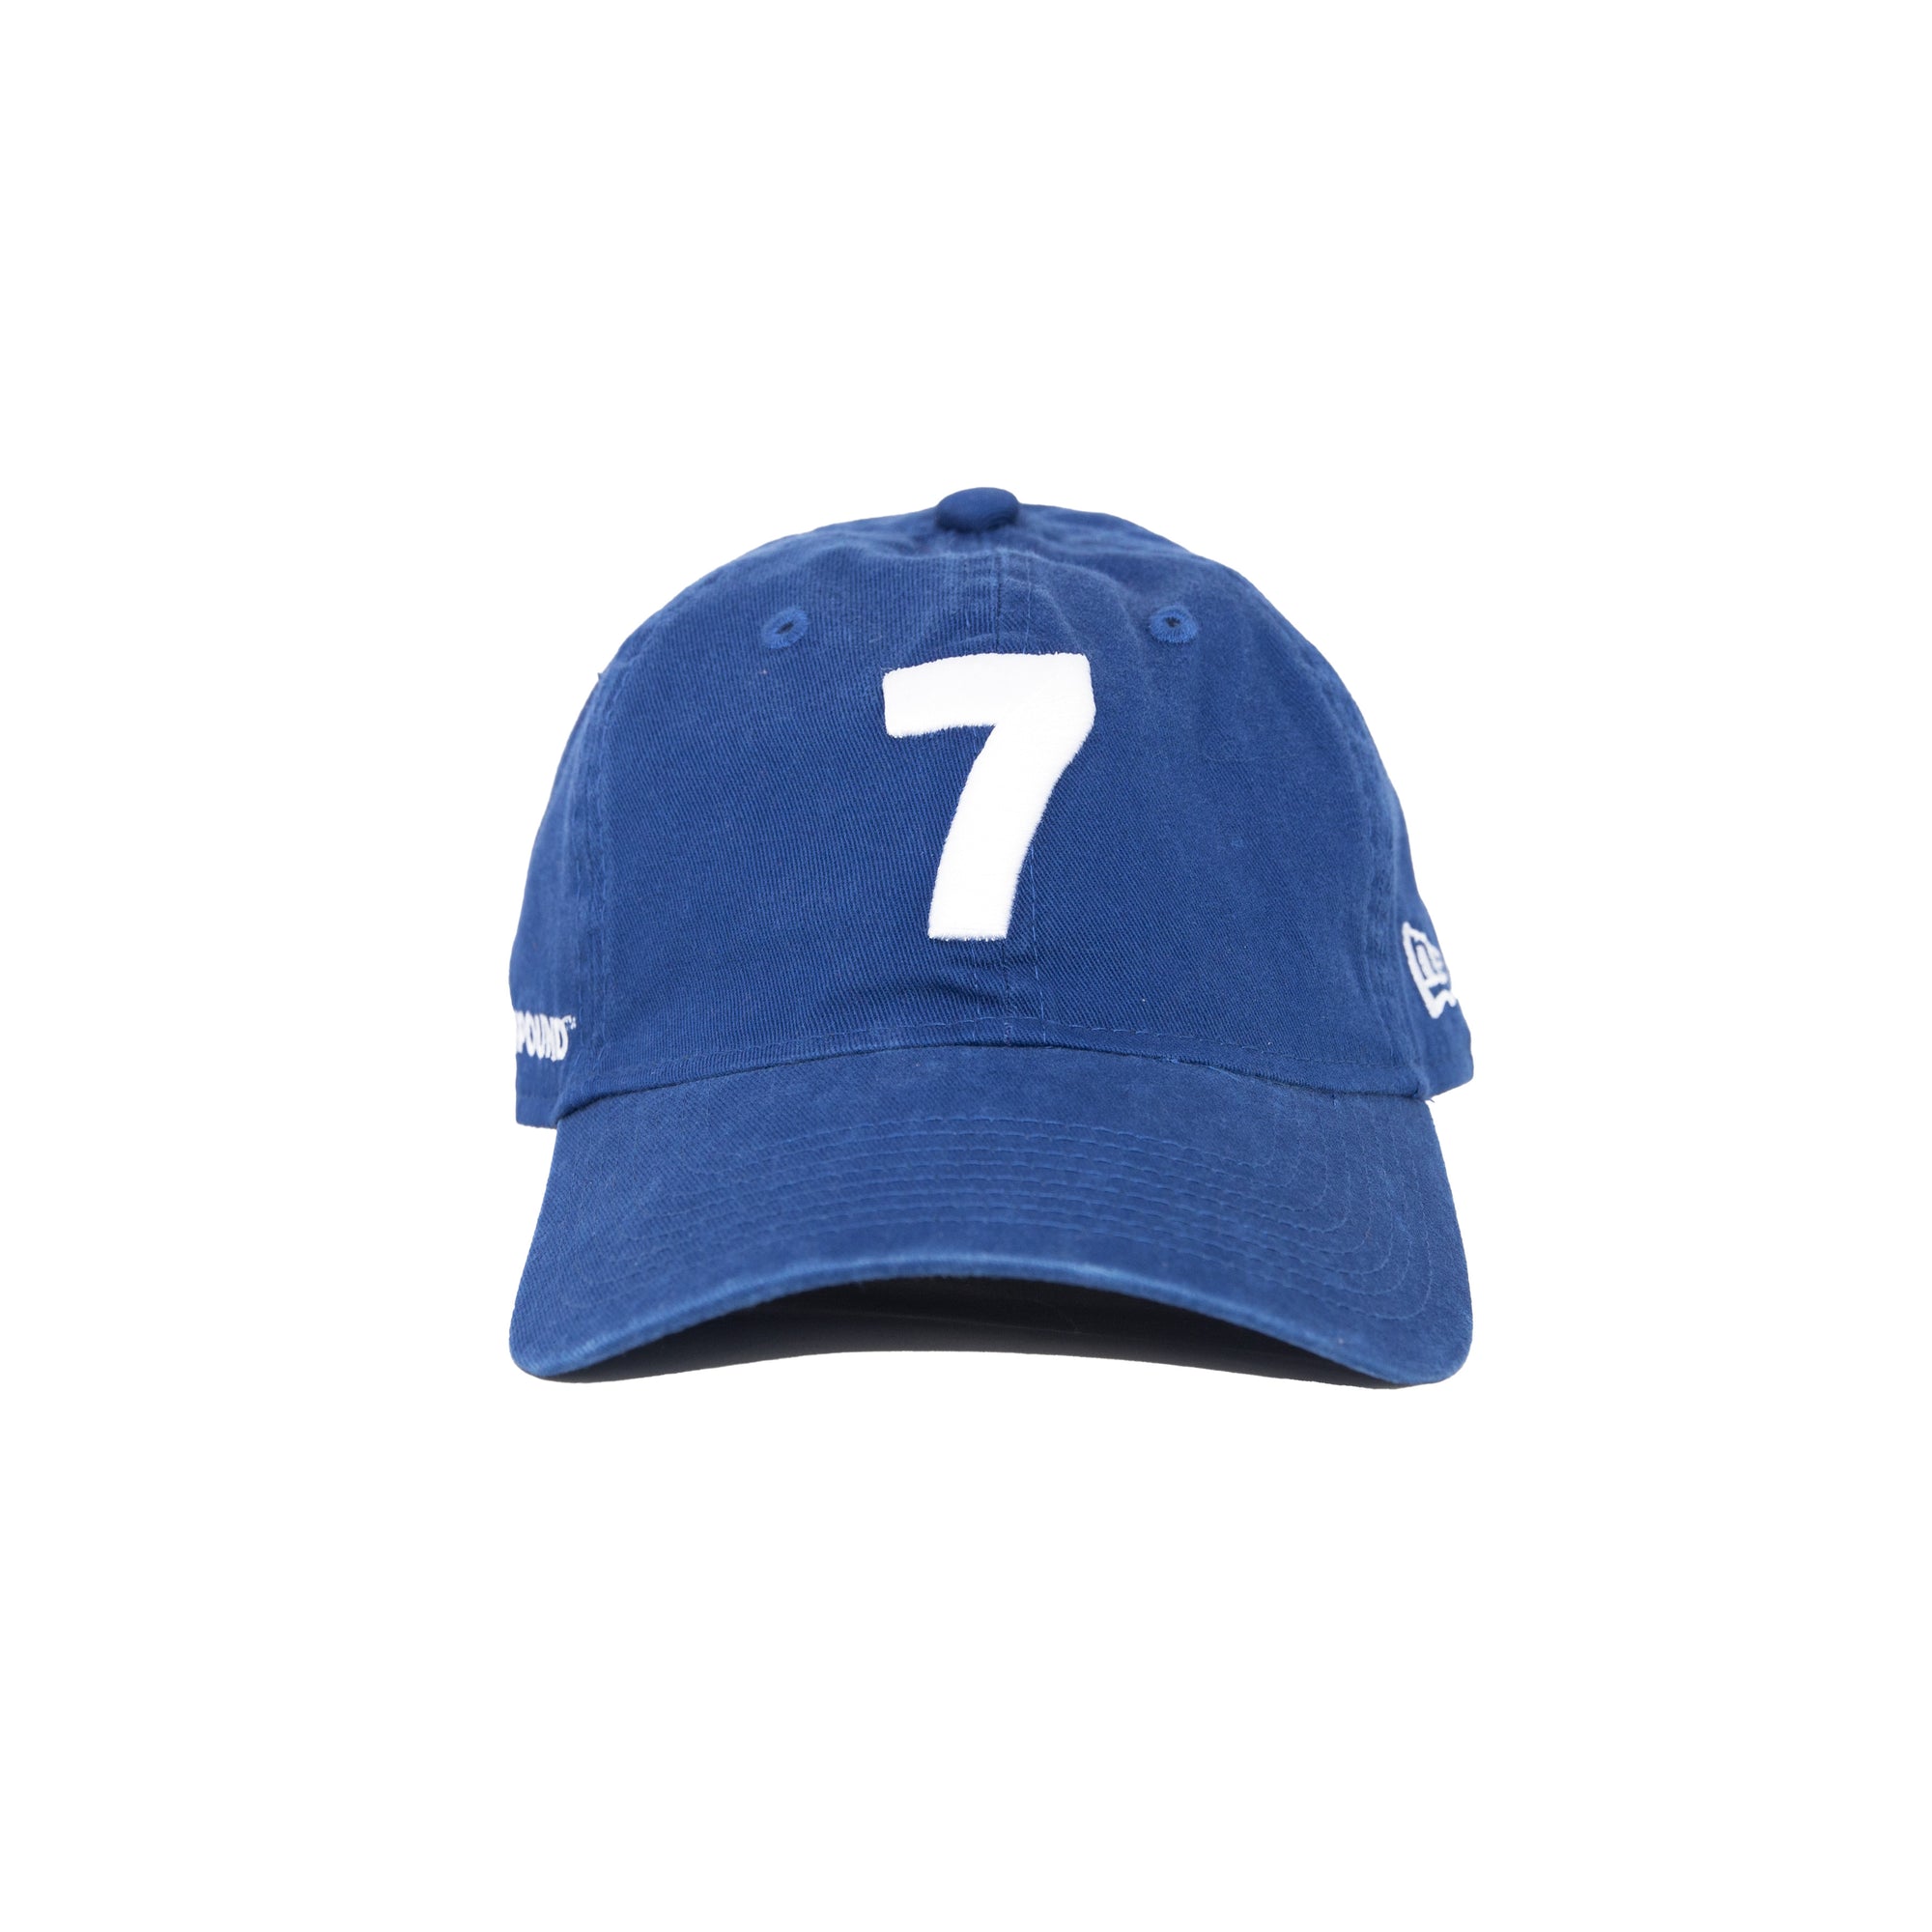 ROYAL '7' DAD HAT